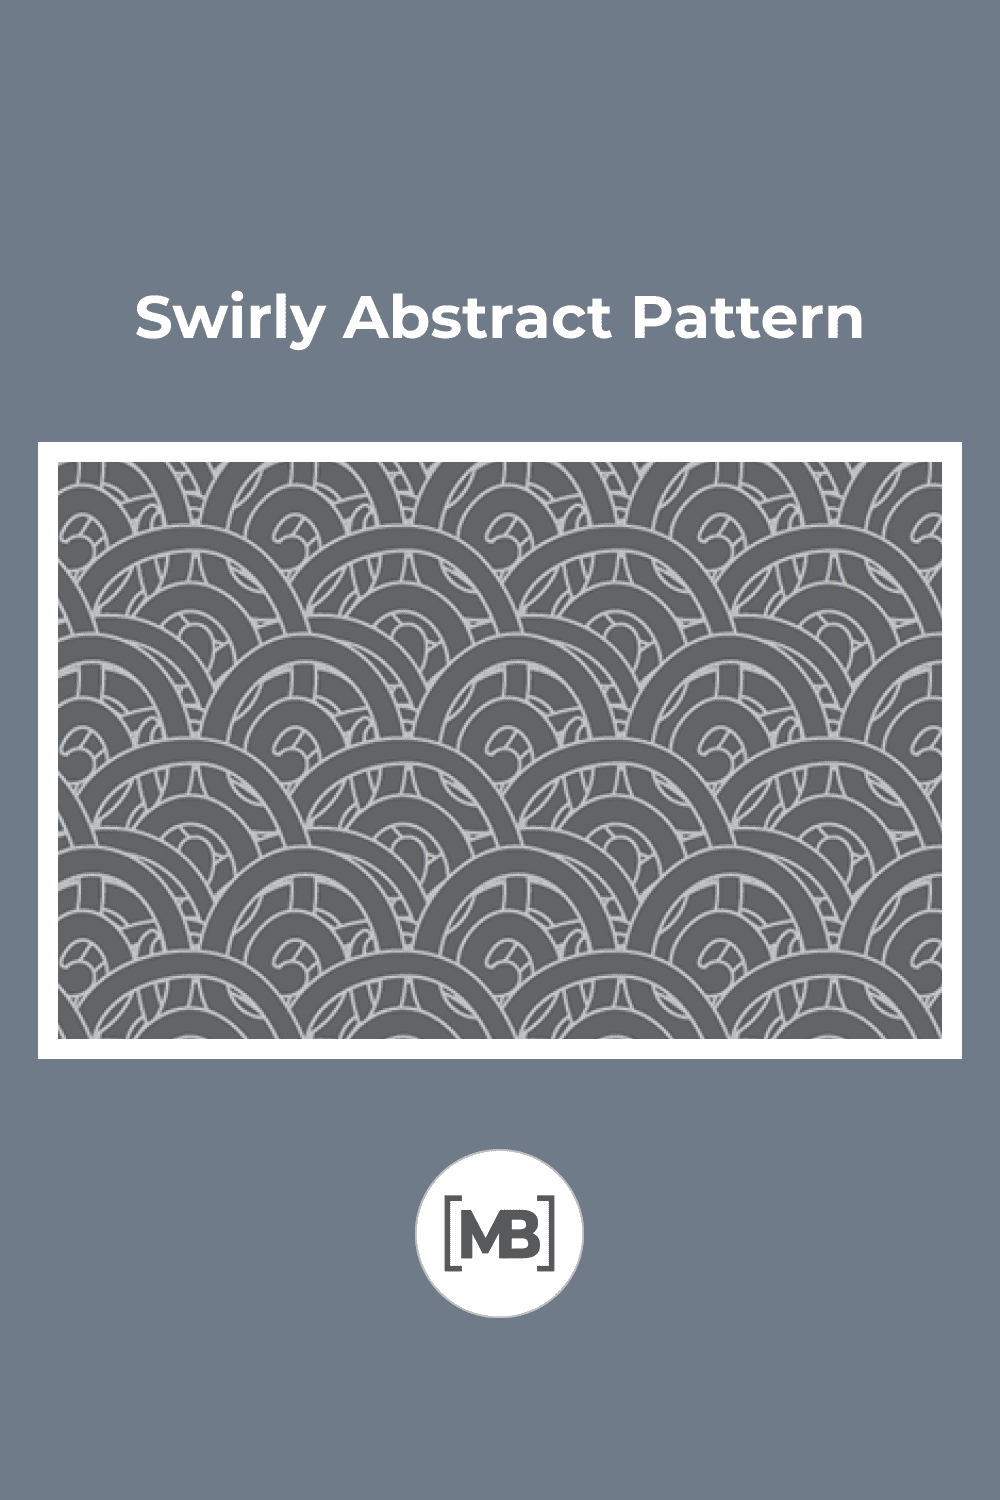 Swirl abstract grey pattern.